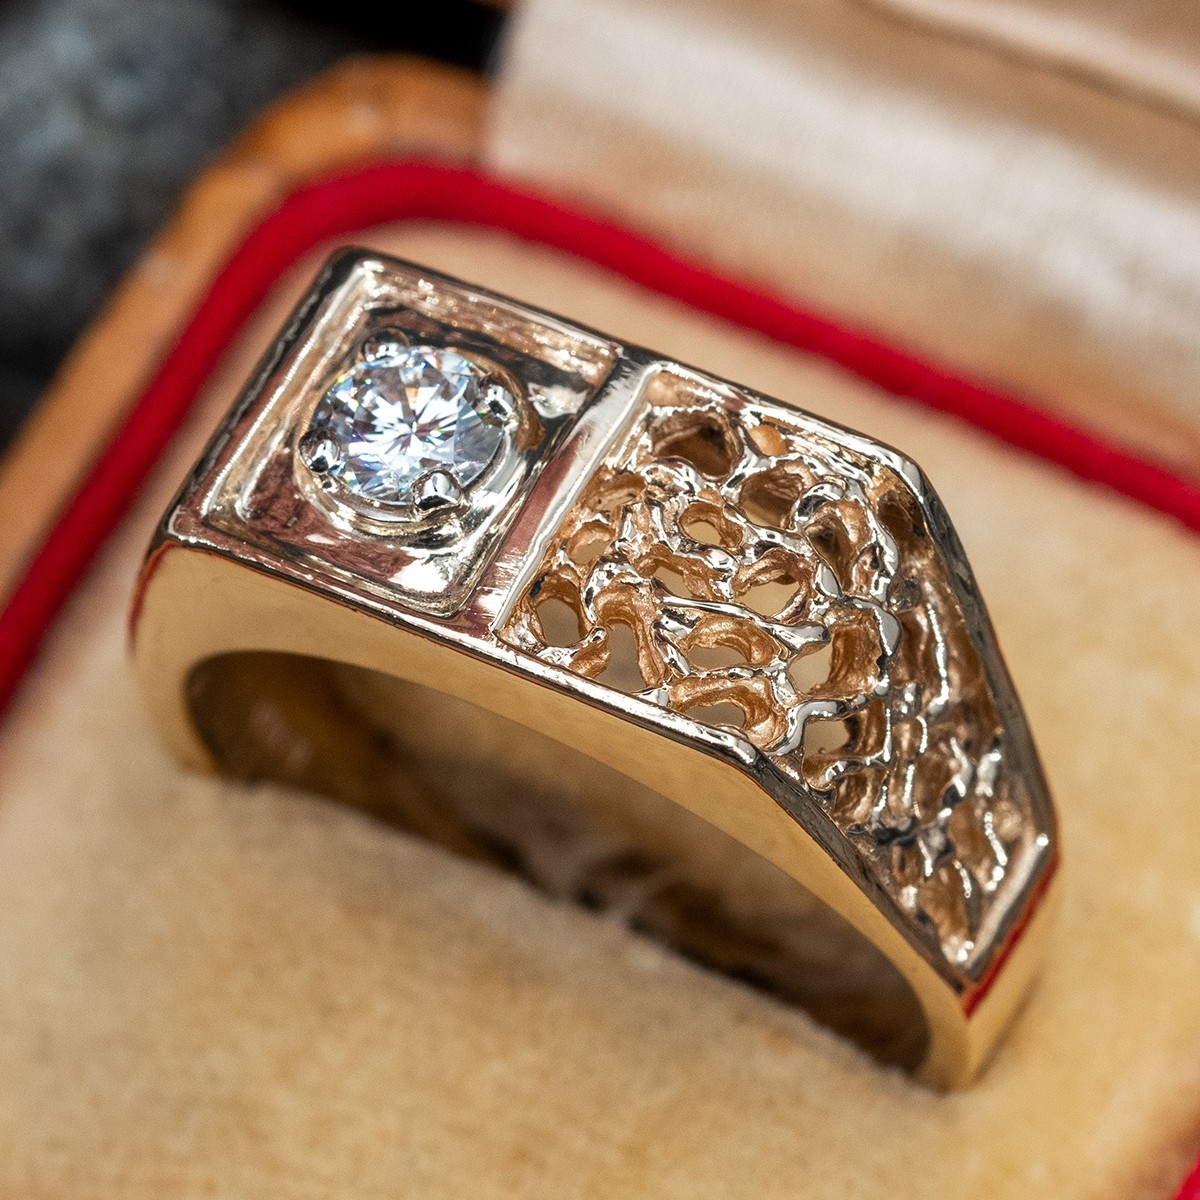 Diamond Wave Ring in Yellow Gold | KLENOTA